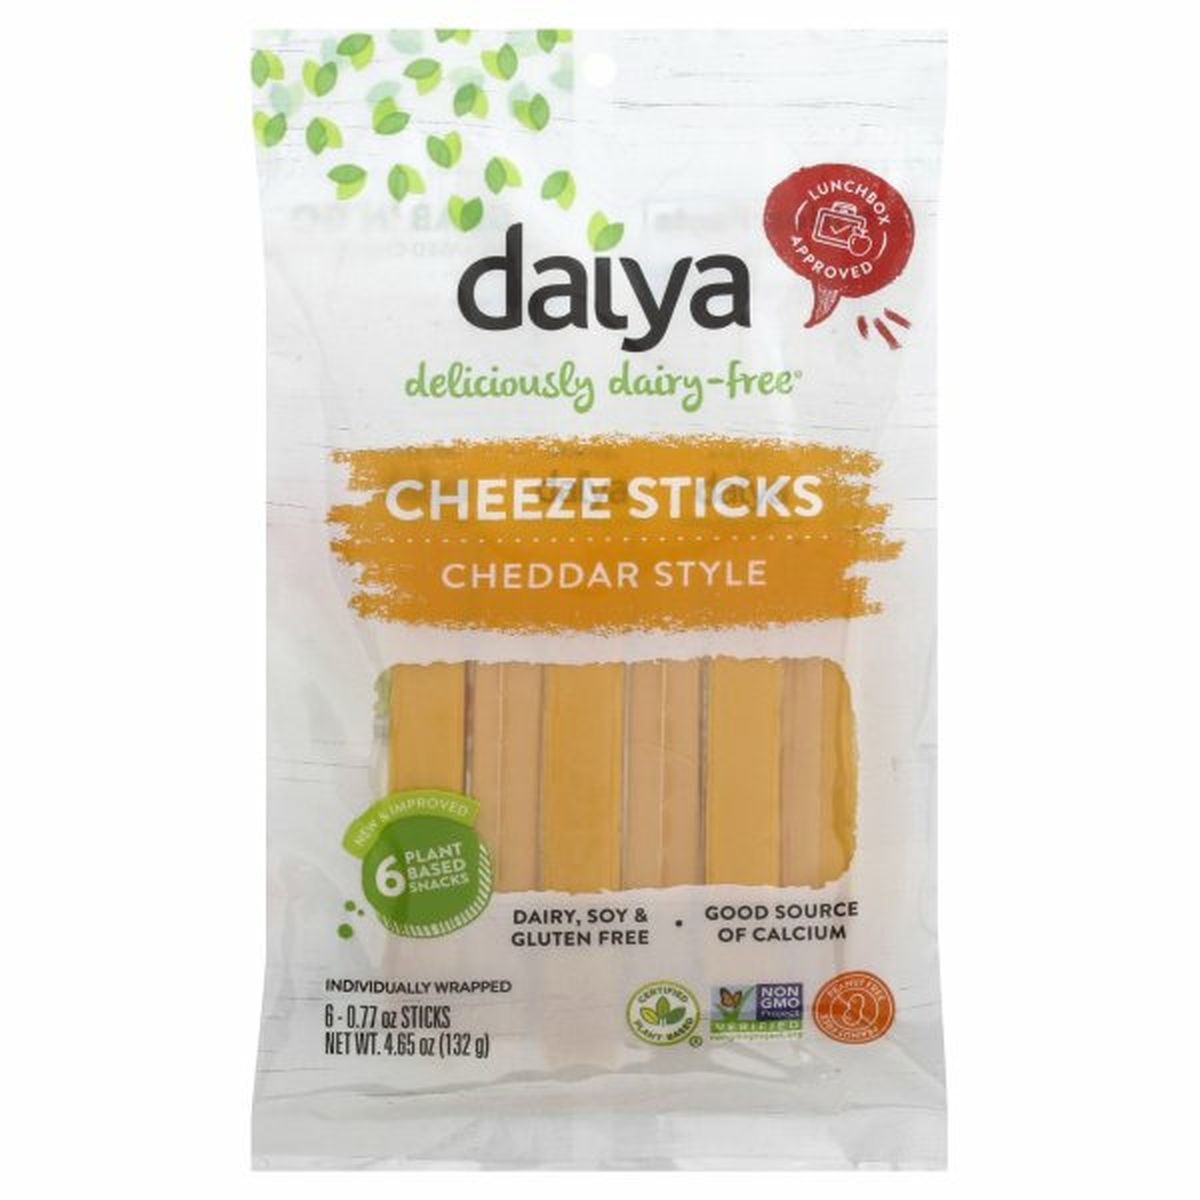 Calories in Daiya Cheese Sticks, Cheddar Style